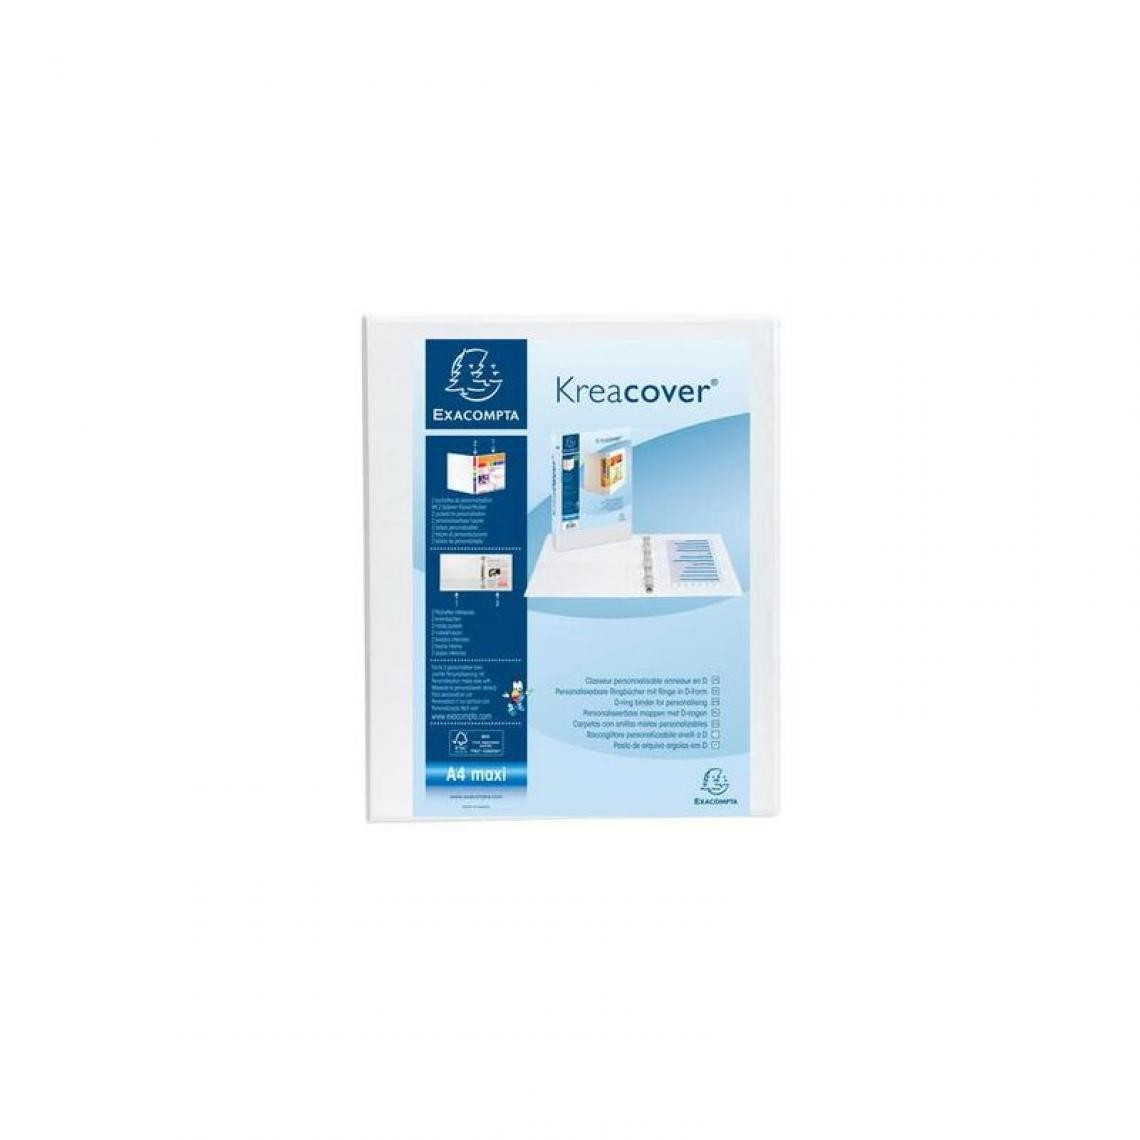 Exacompta - EXACOMPTA Classeur personnalisable Kreacover, A4 Maxi, blanc () - Accessoires Bureau